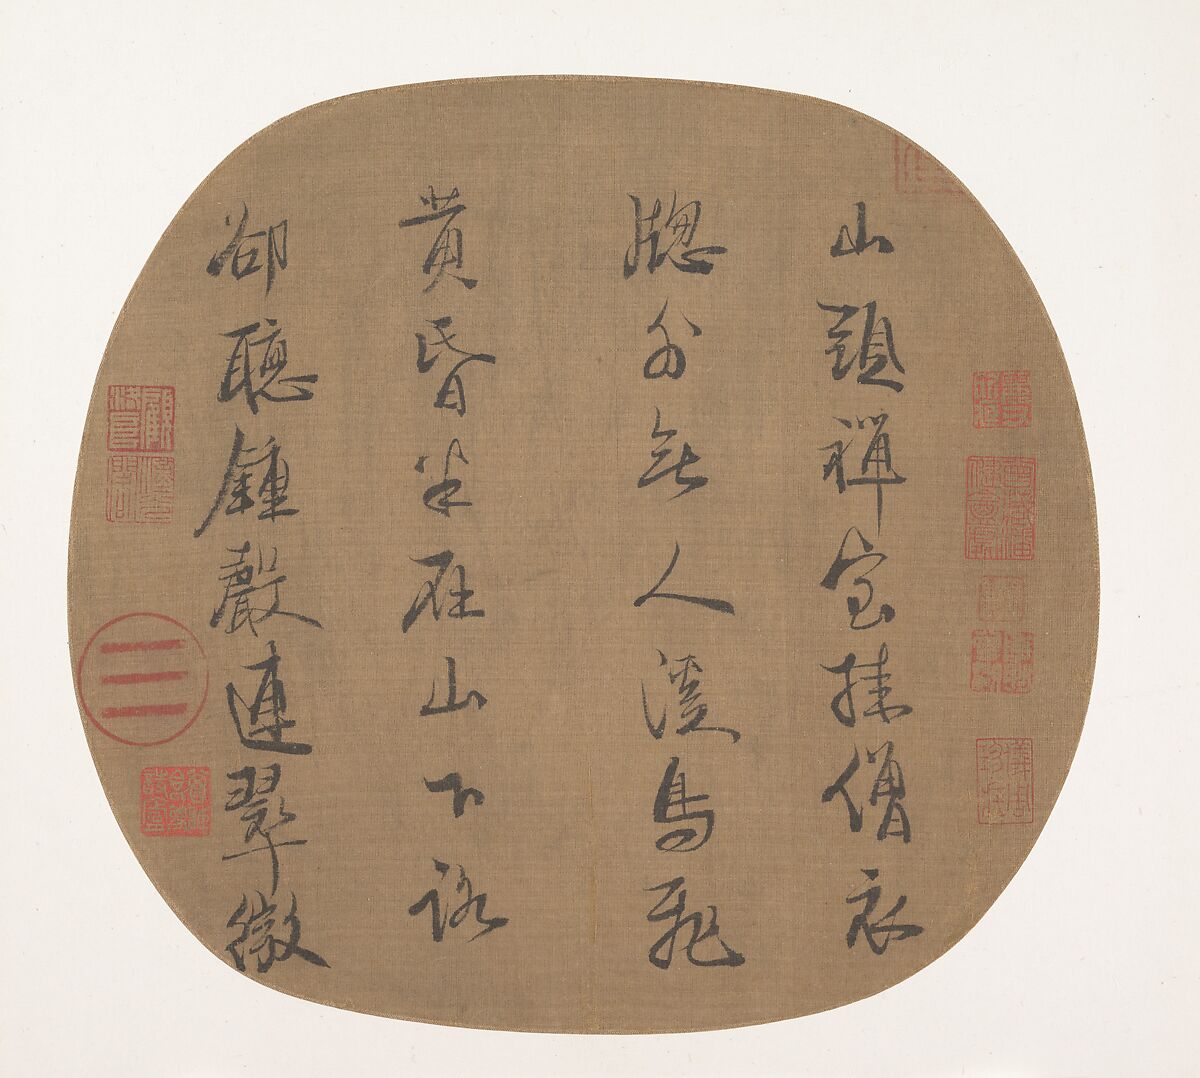 Quatrain by Meng Haoran, Emperor Lizong (Chinese, 1205–64, r. 1224–64), Fan mounted as an album leaf; ink on silk, China 